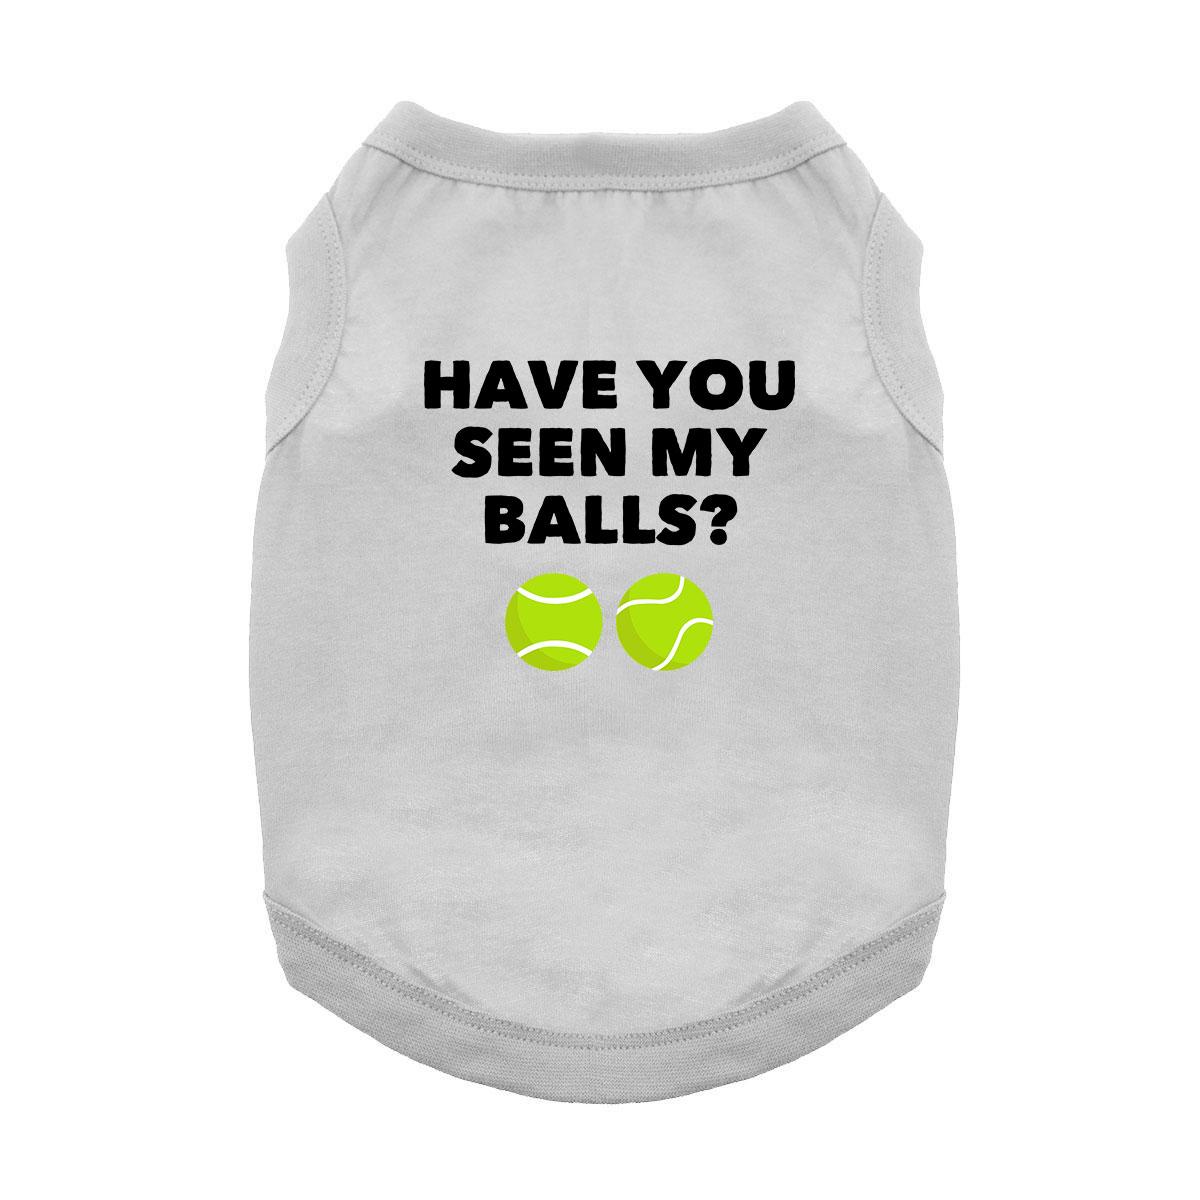 Have You Seen My Balls? Dog Shirt - Gray